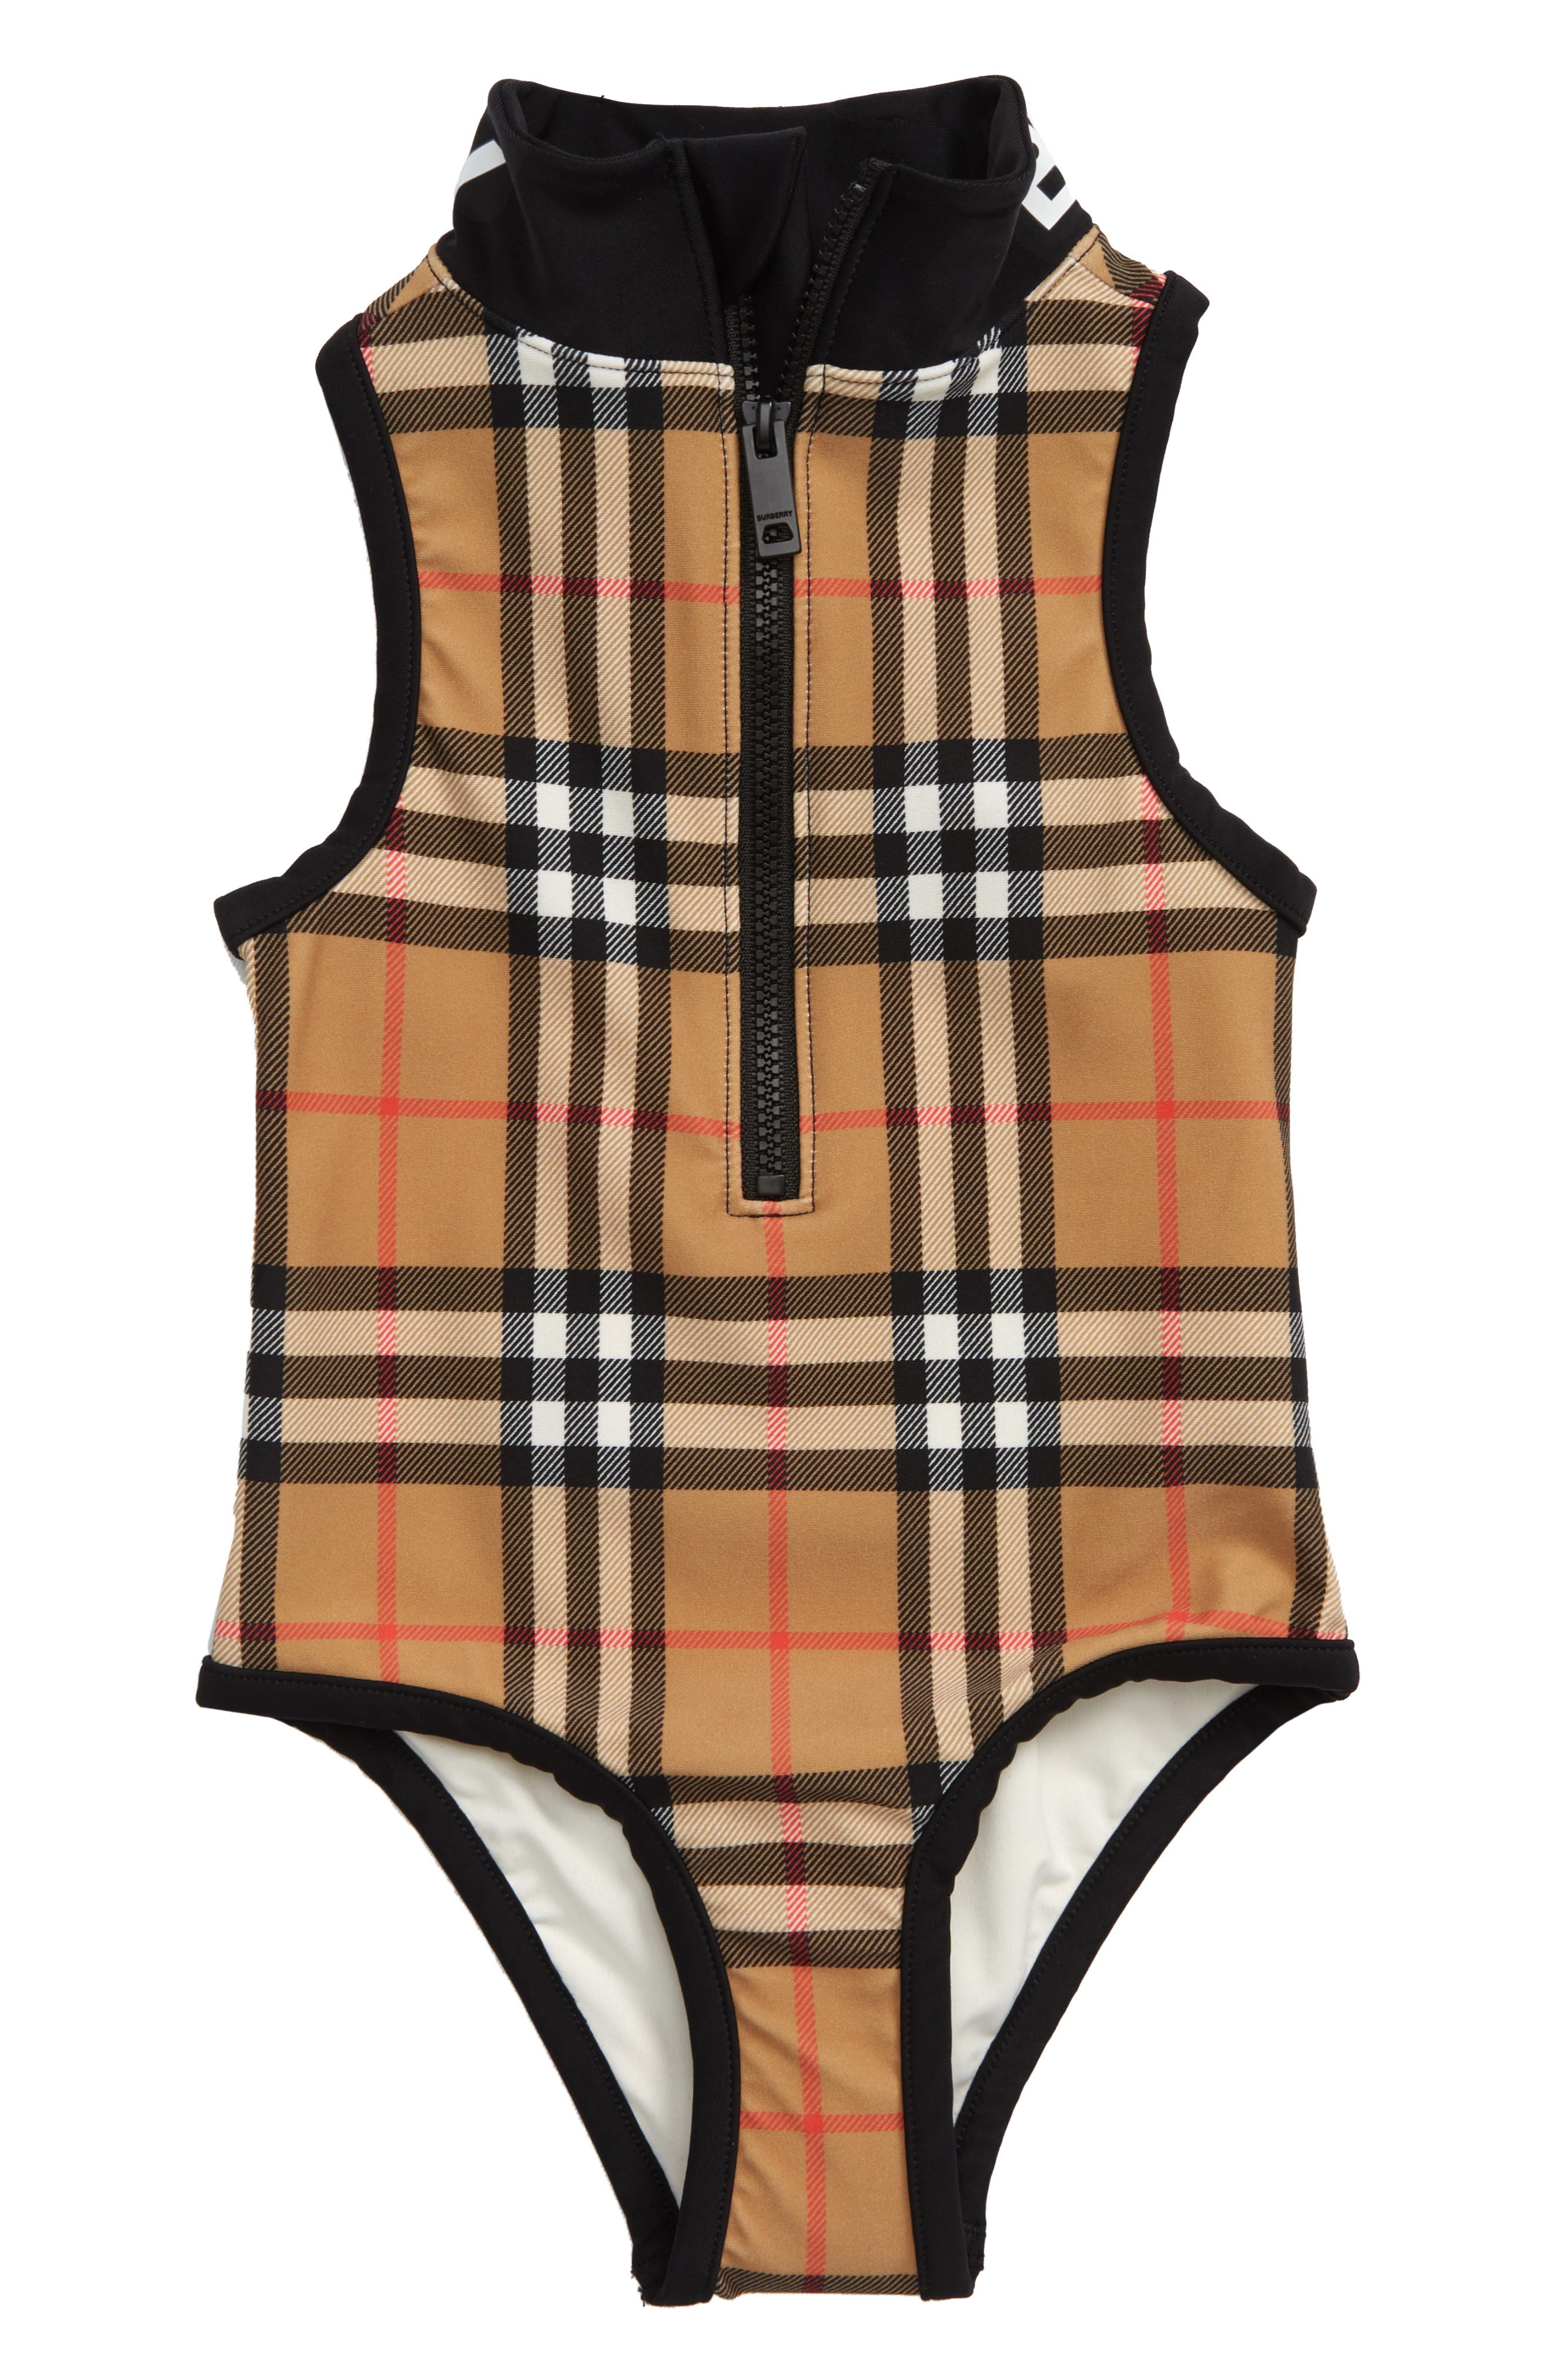 baby girl burberry bathing suit